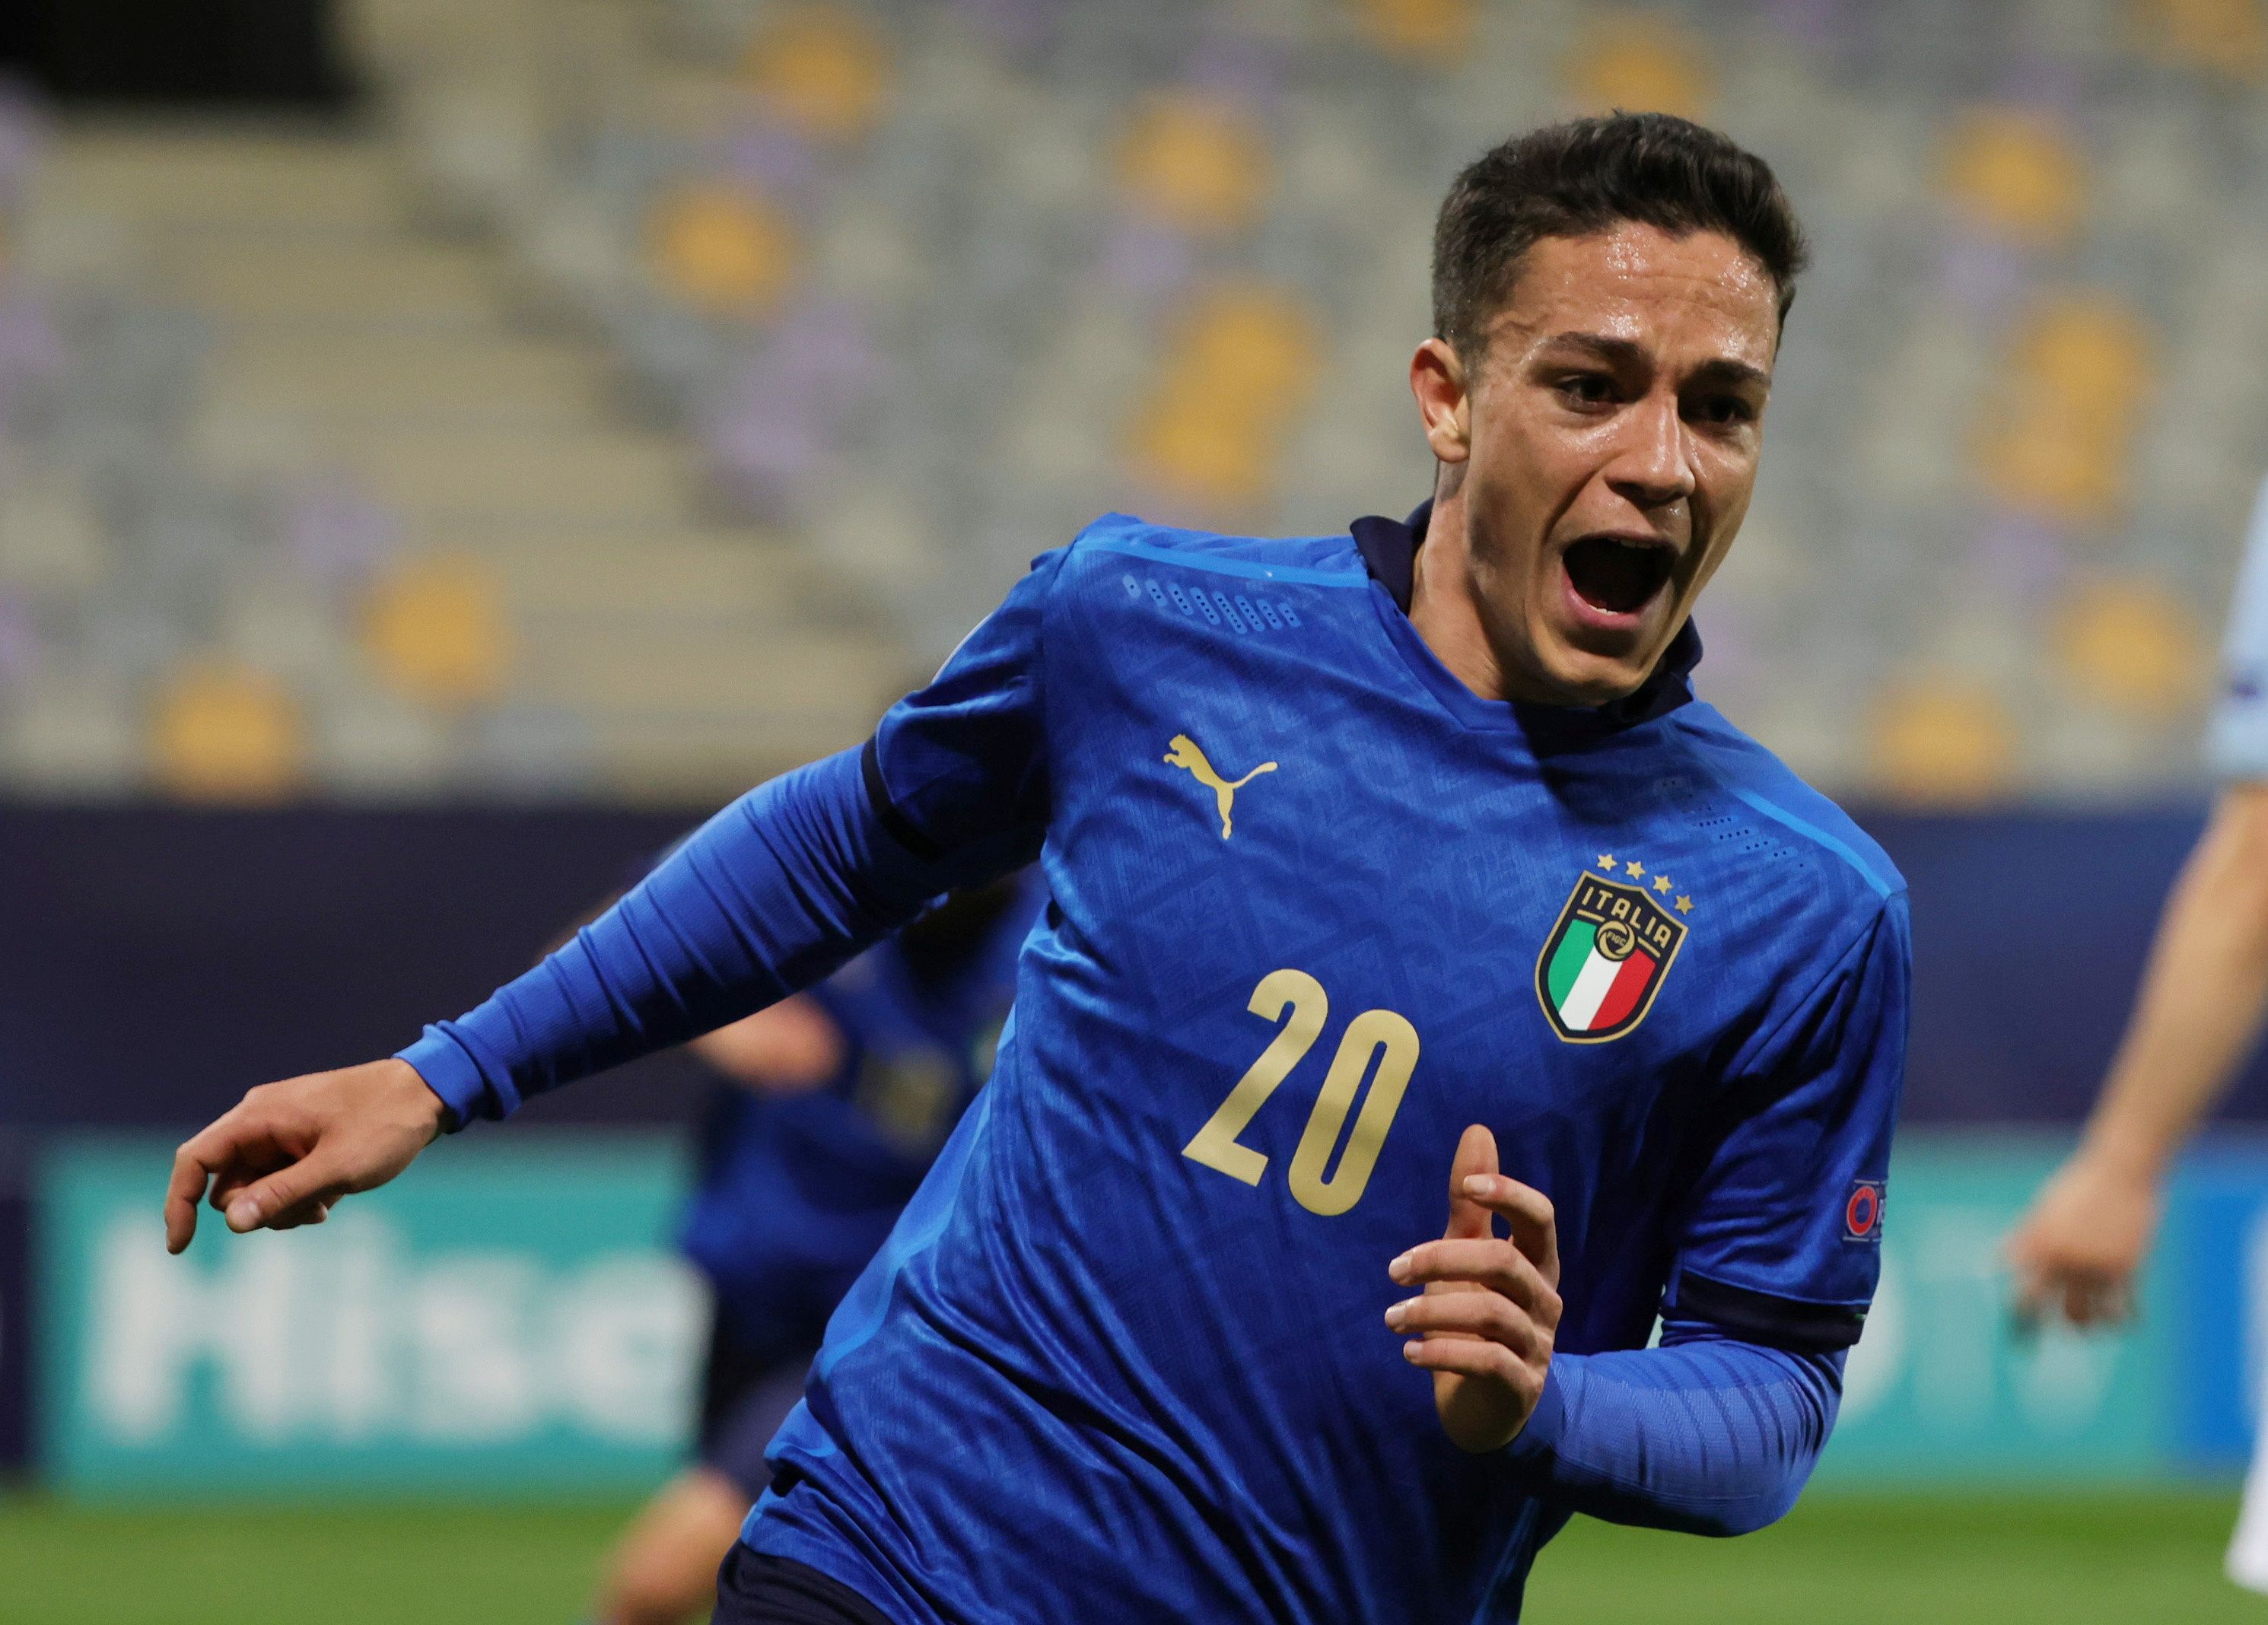 Mancini names uncapped striker Raspadori in final Italy Euro 2020 squad